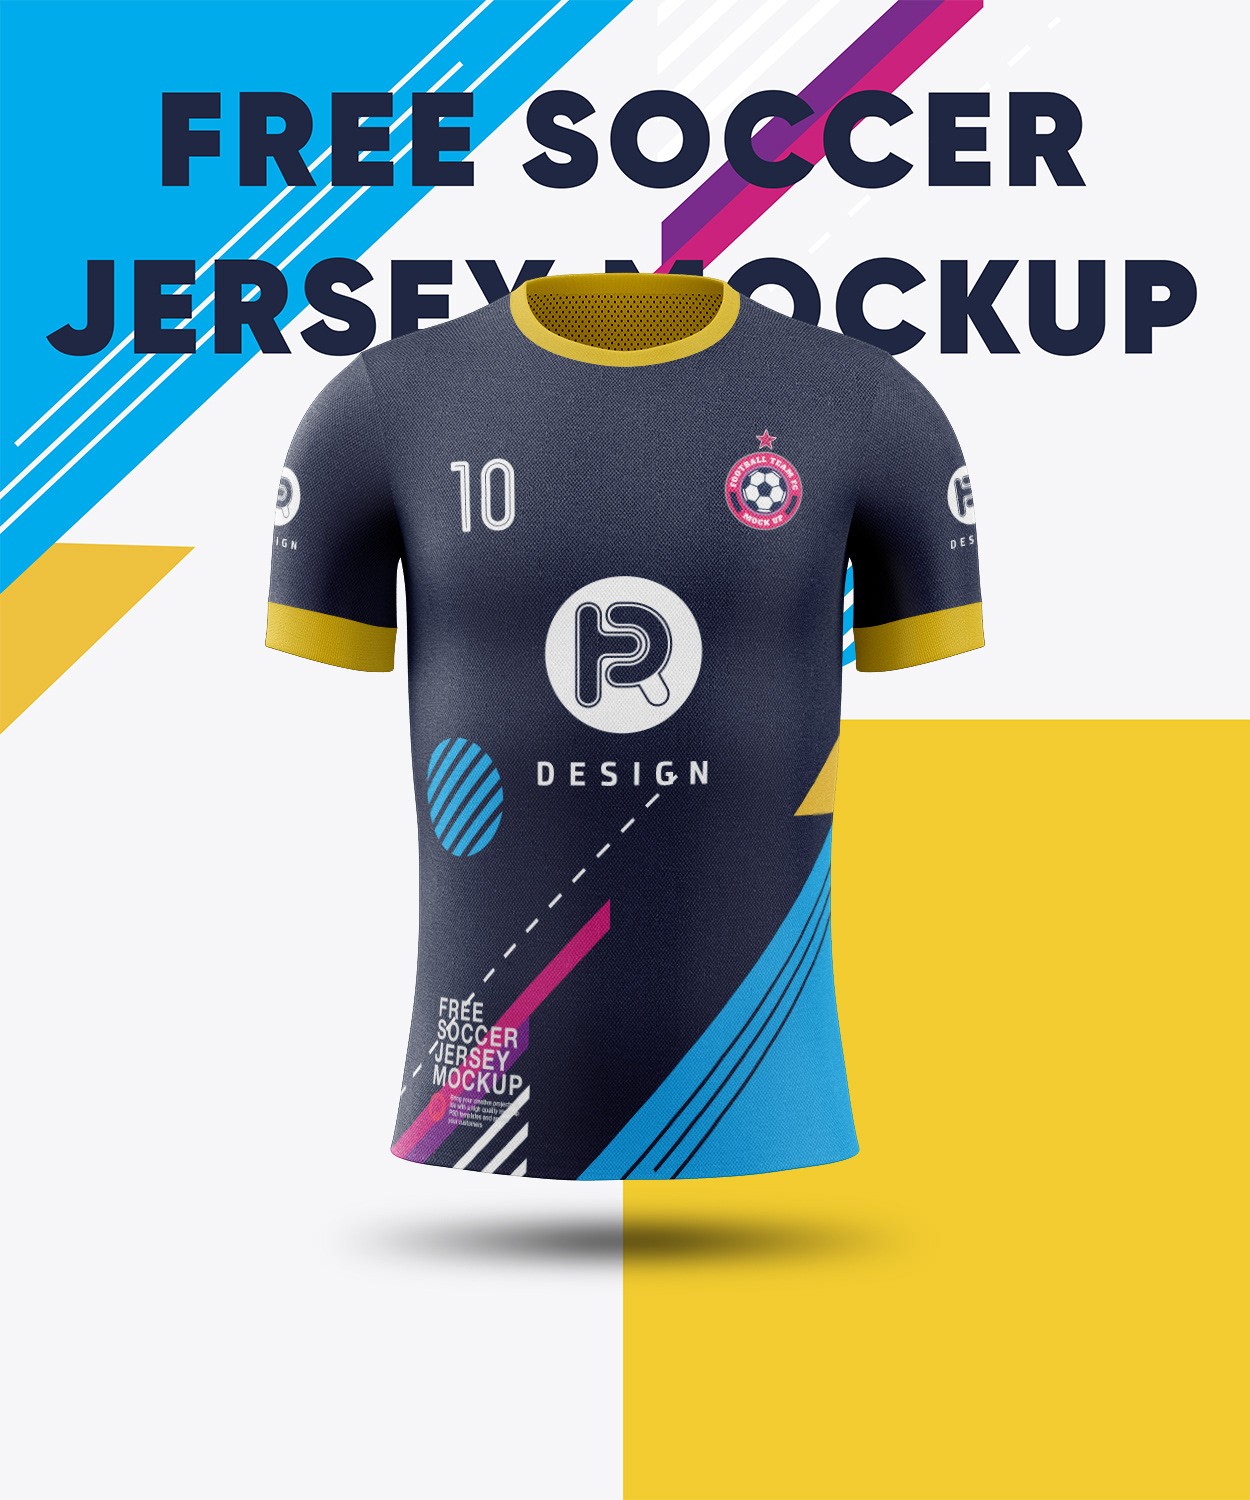 Download Uniform Footeball Mockup Download Free / Football / Soccer Kit Mockup Free Download | Soccer ...